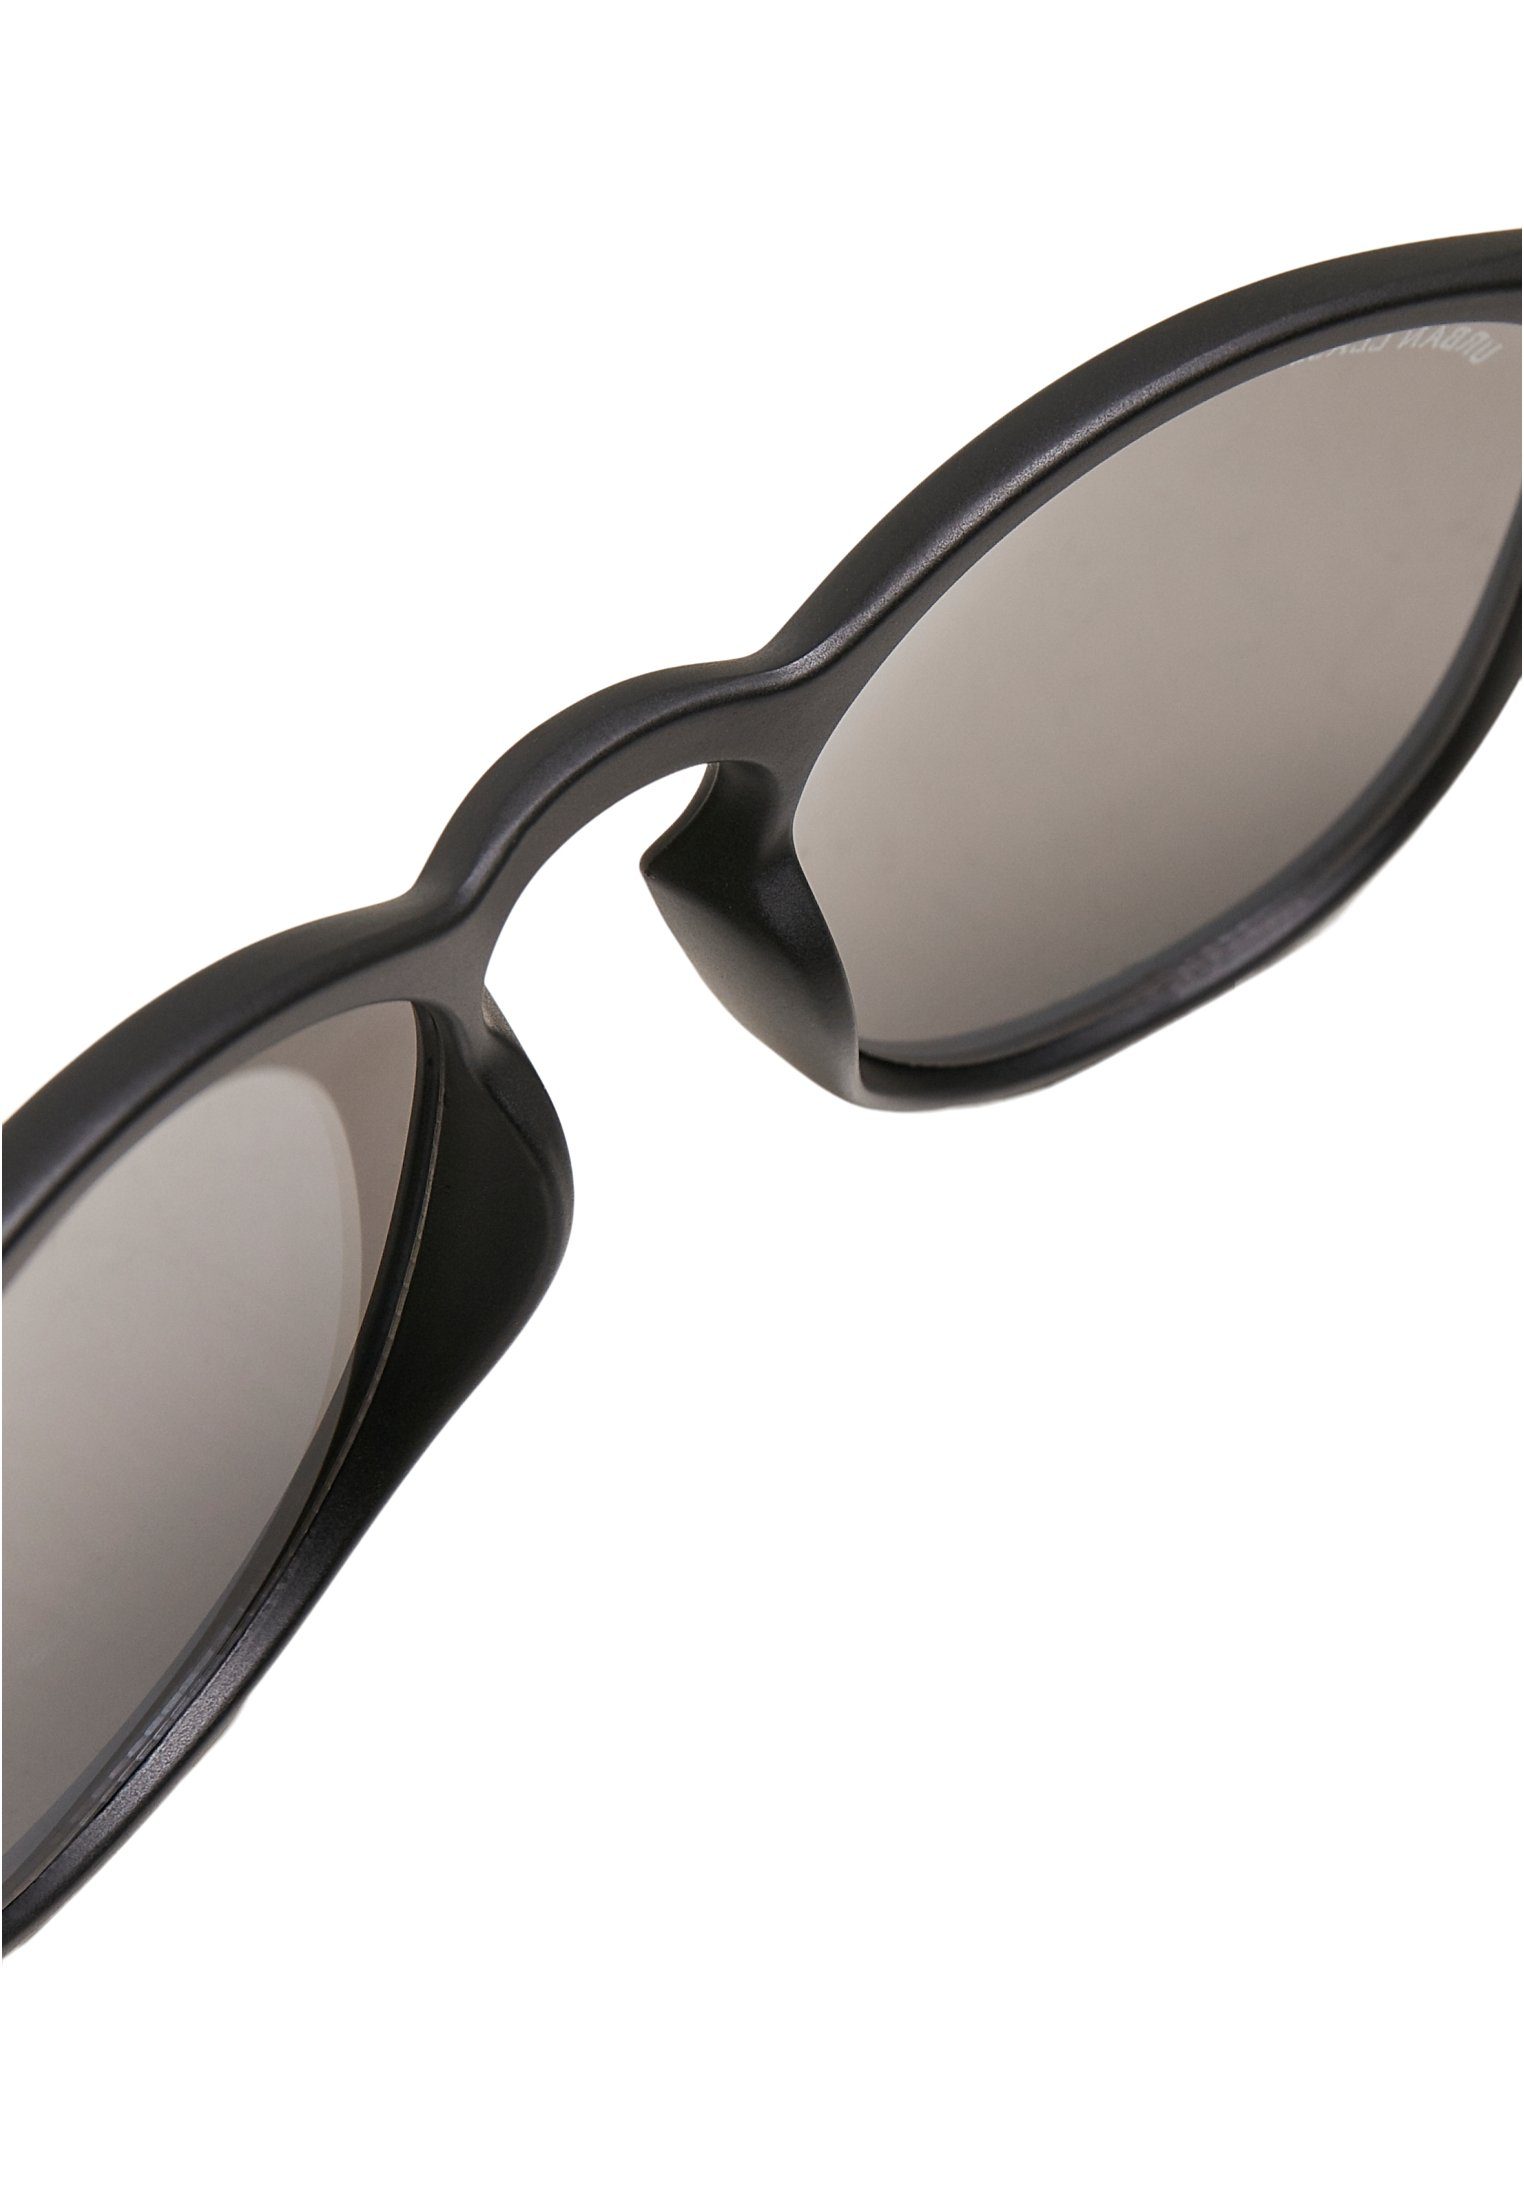 URBAN CLASSICS Sonnenbrille Accessoires 106 Sunglasses black/silver UC